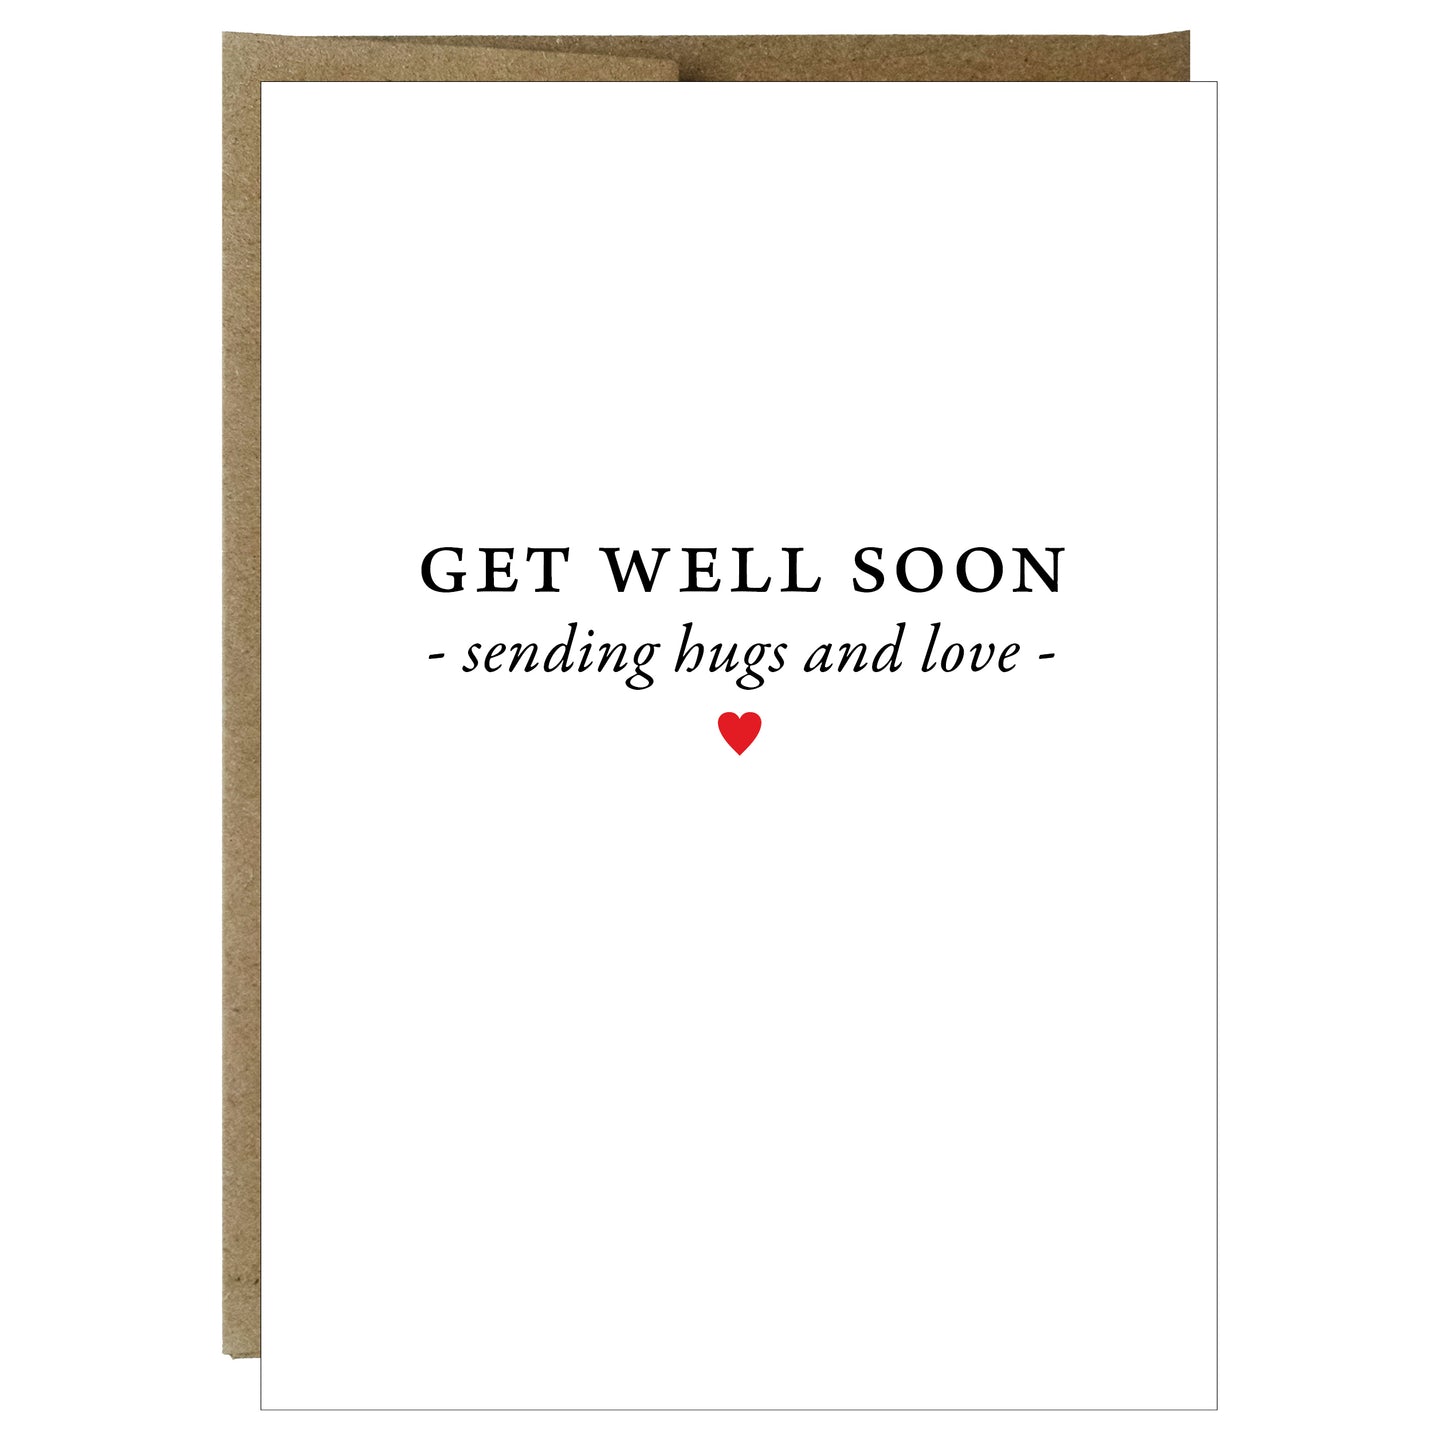 Get Well Soon Sending Hugs and Love Greeting Card